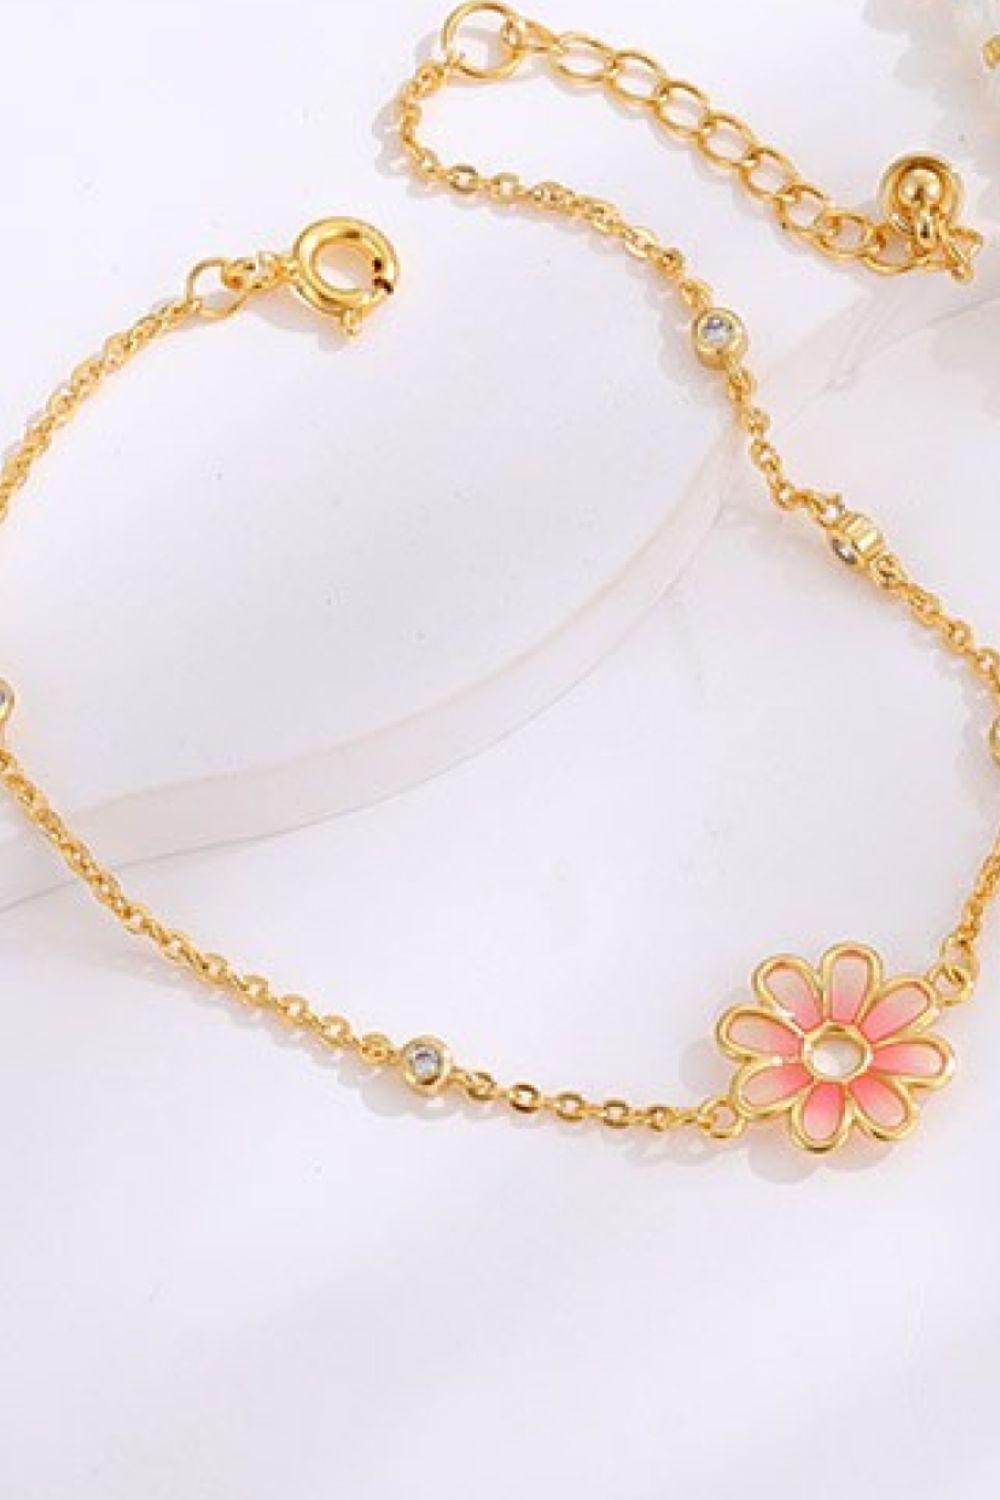 Flower Chain Bracelet - Kawaii Stop - Bracelet, Bracelets, Copper and Zircon, Elegant Jewelry, Flower Chain Bracelet, Ken, Modern Design, Polished Craftsmanship, Ship From Overseas